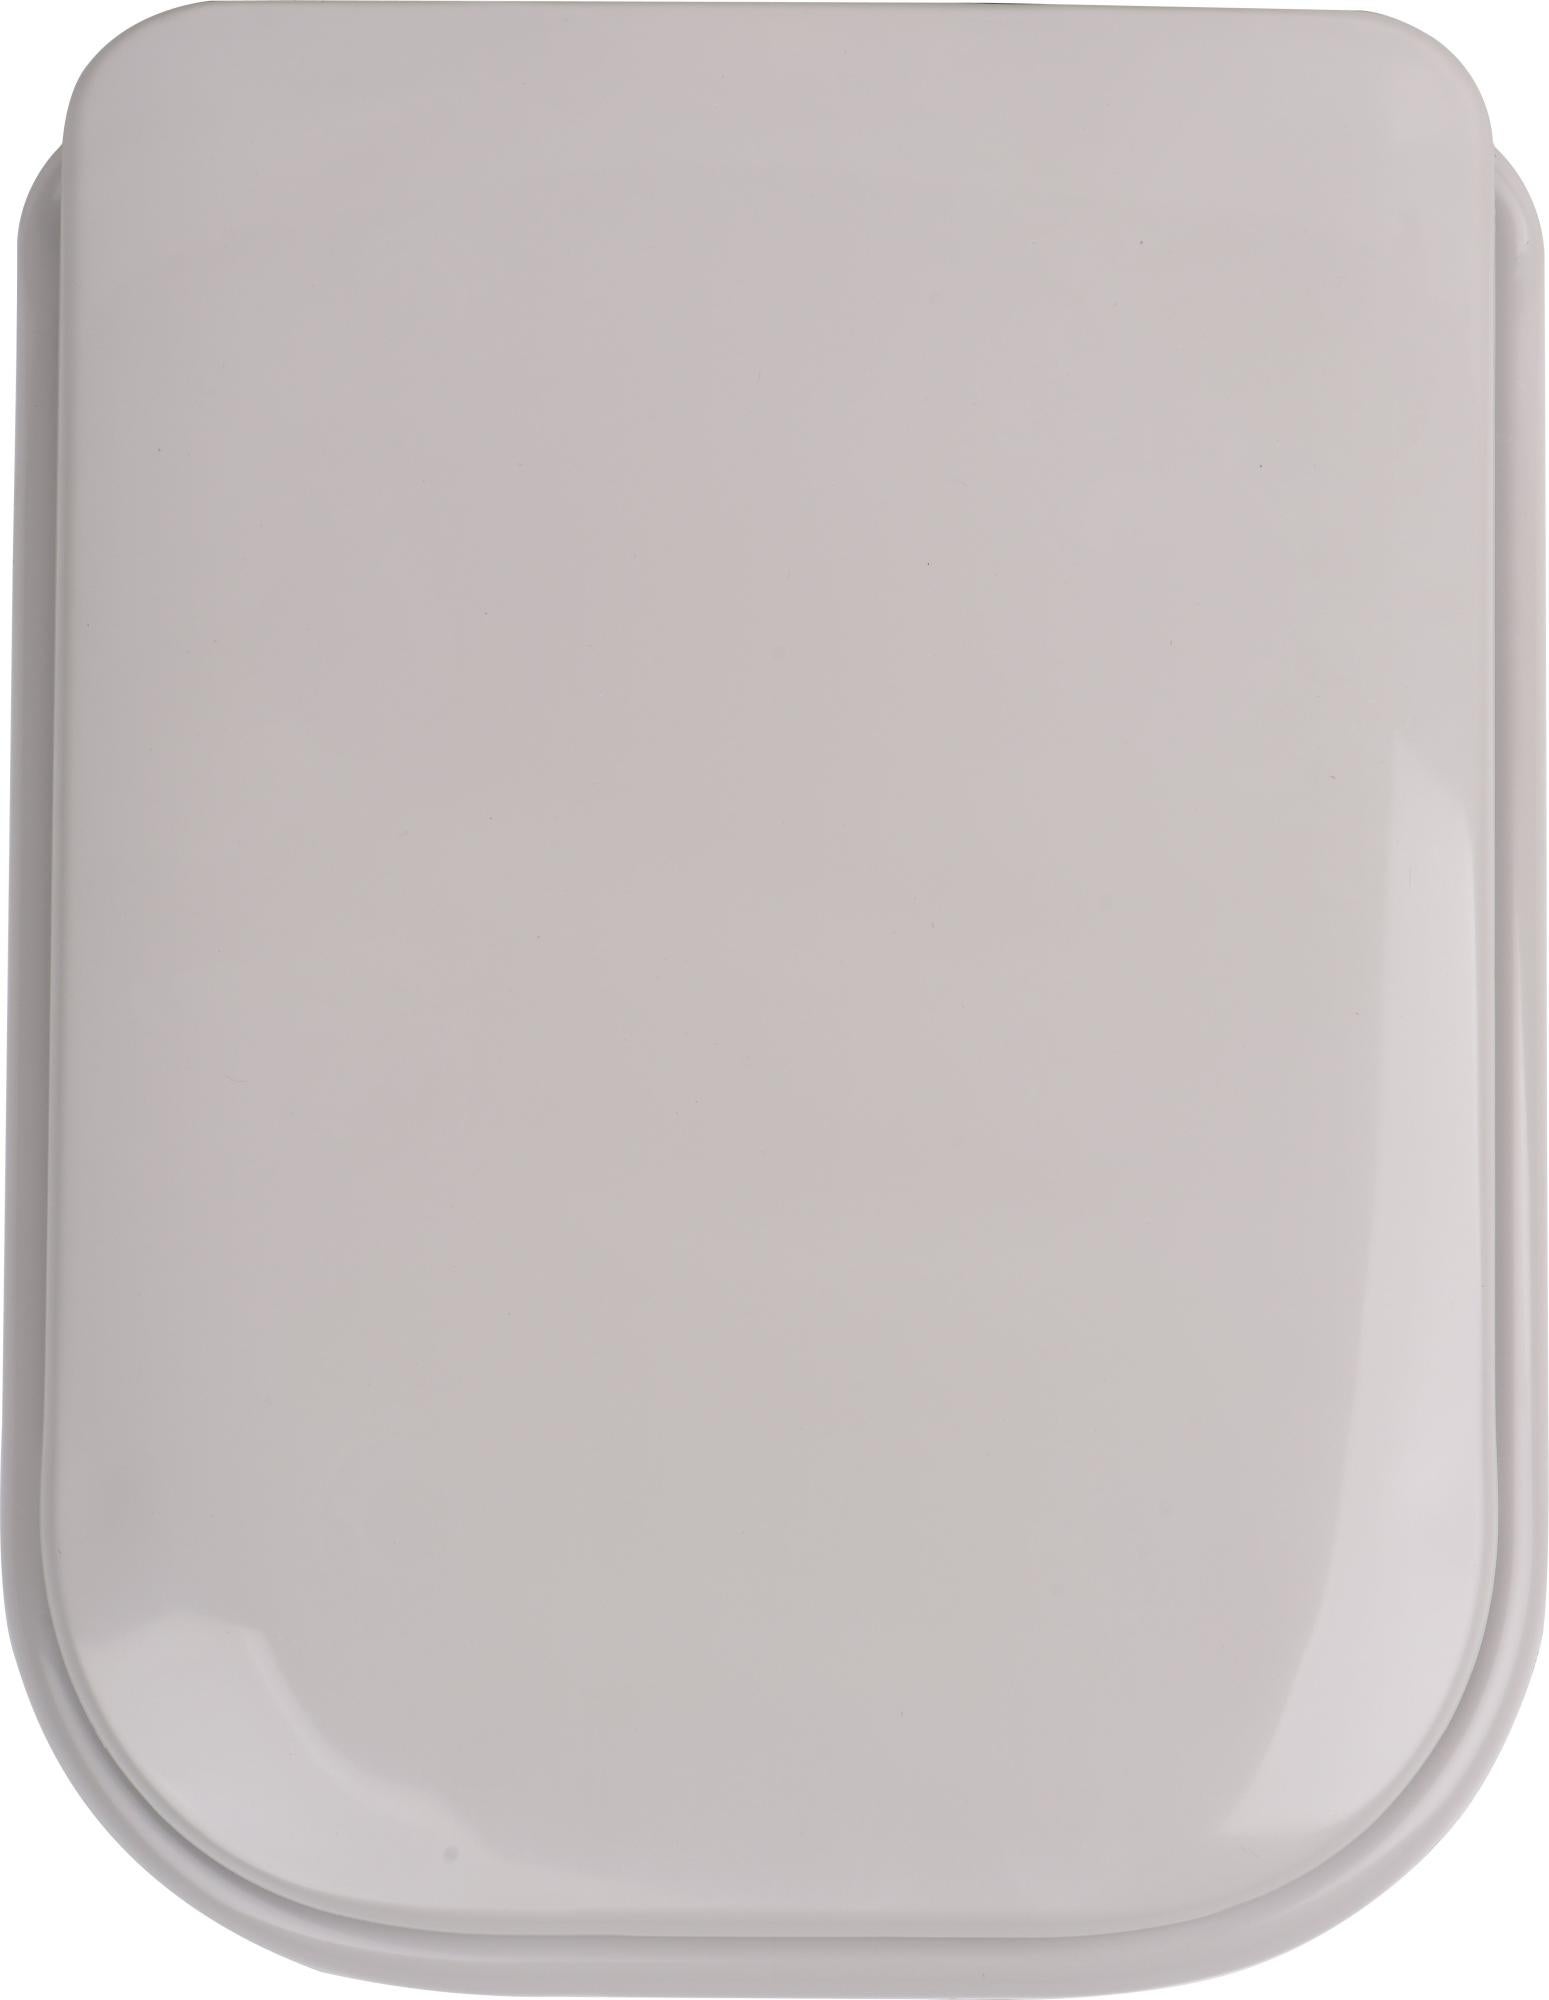 Tapa wc lunel compatible almina gris / plata